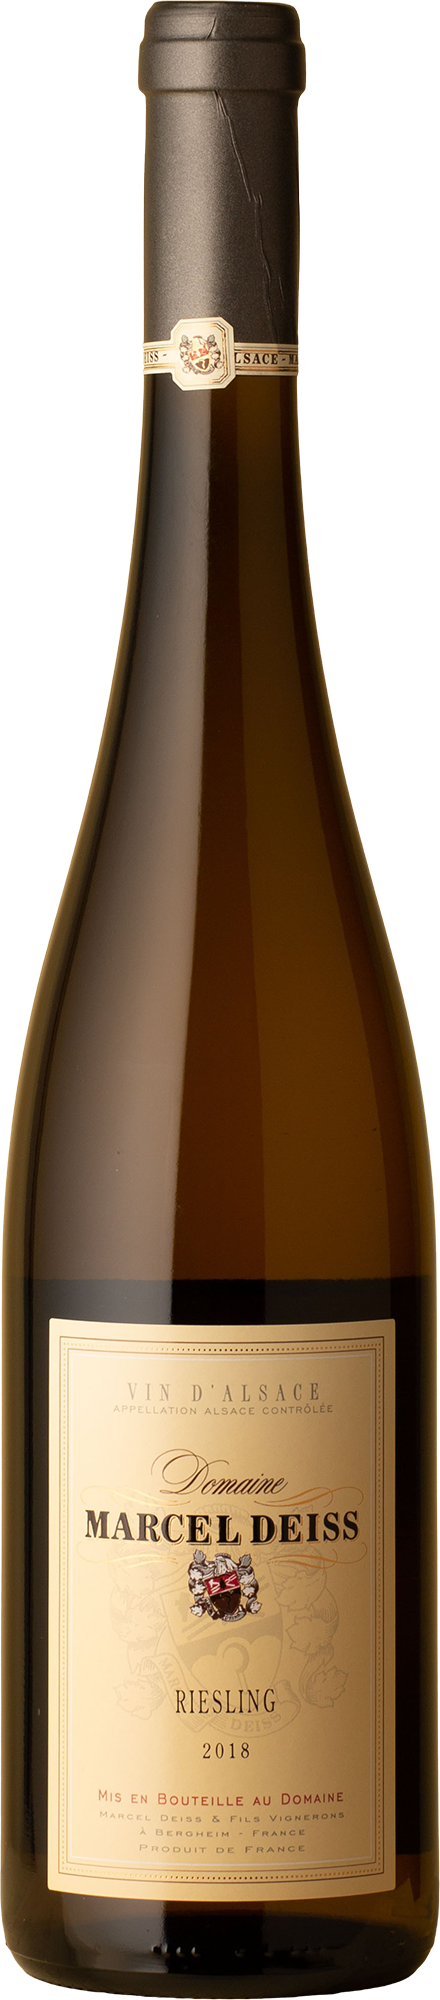 Marcel Deiss - Riesling 2018 White Wine